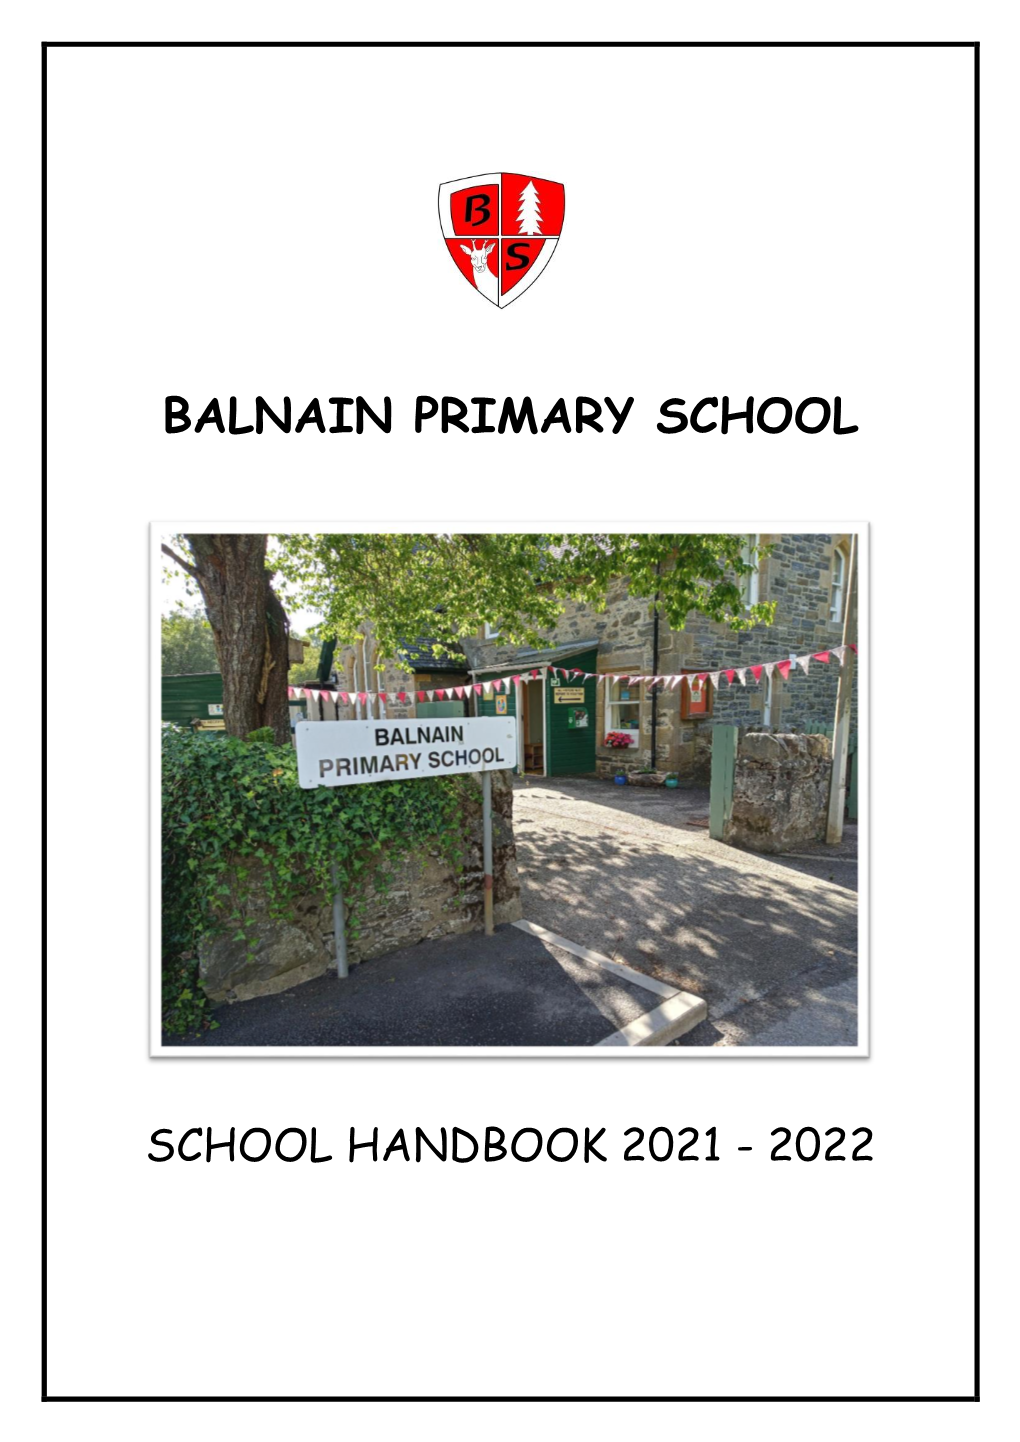 Balnain Primary School